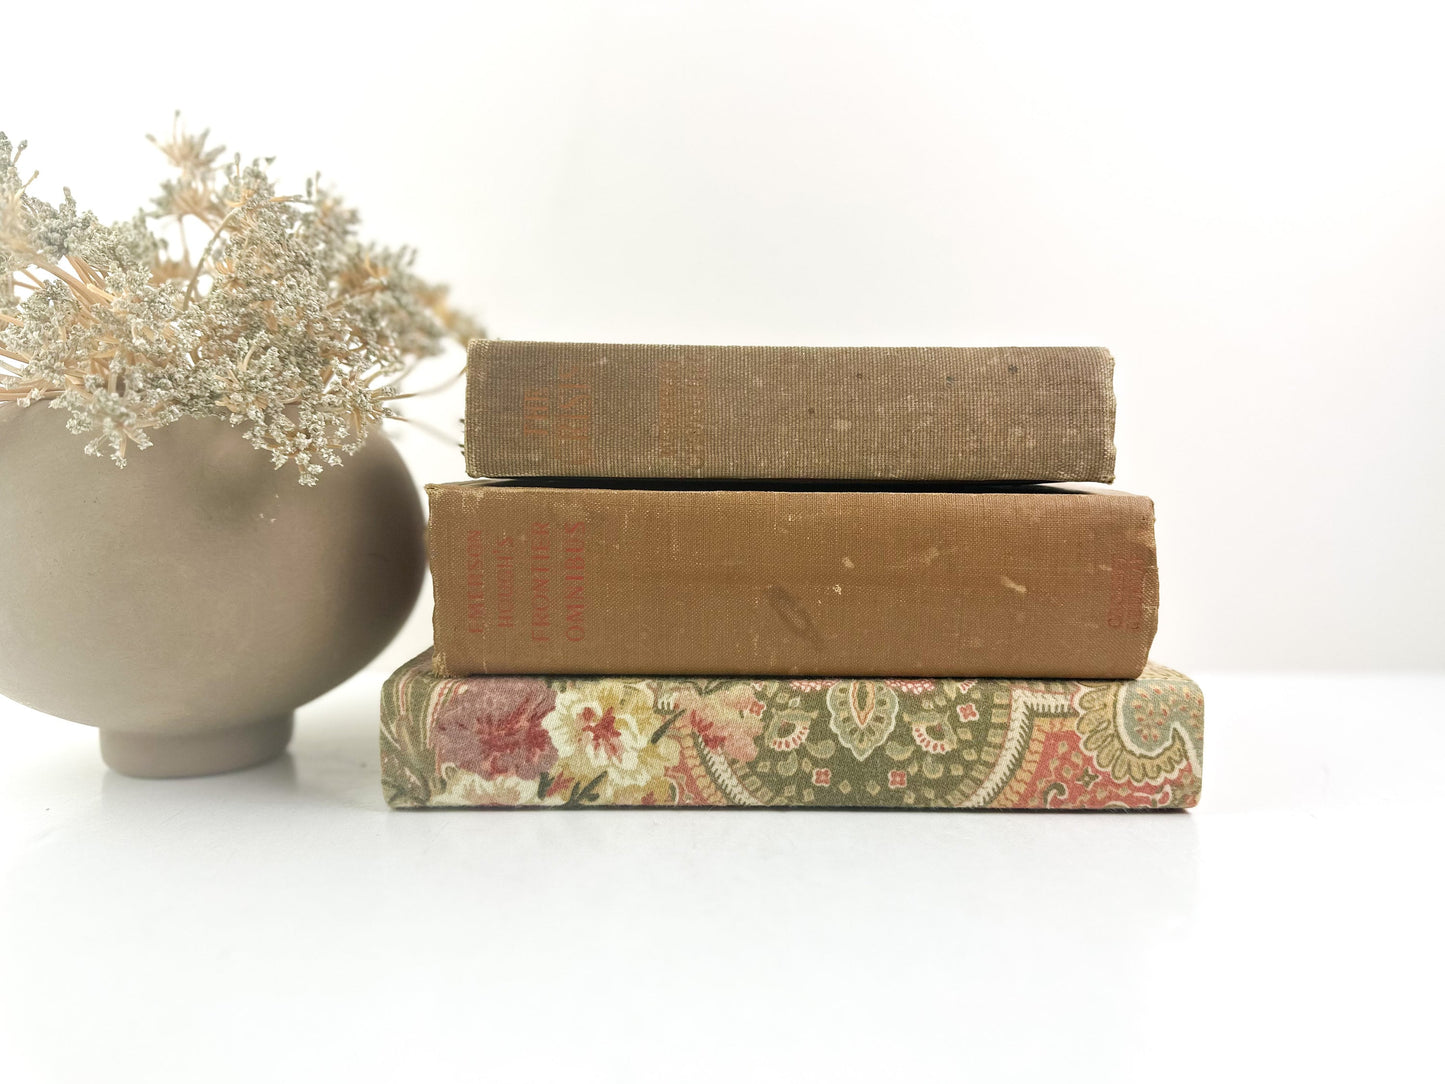 Decorative Books for Home Decor